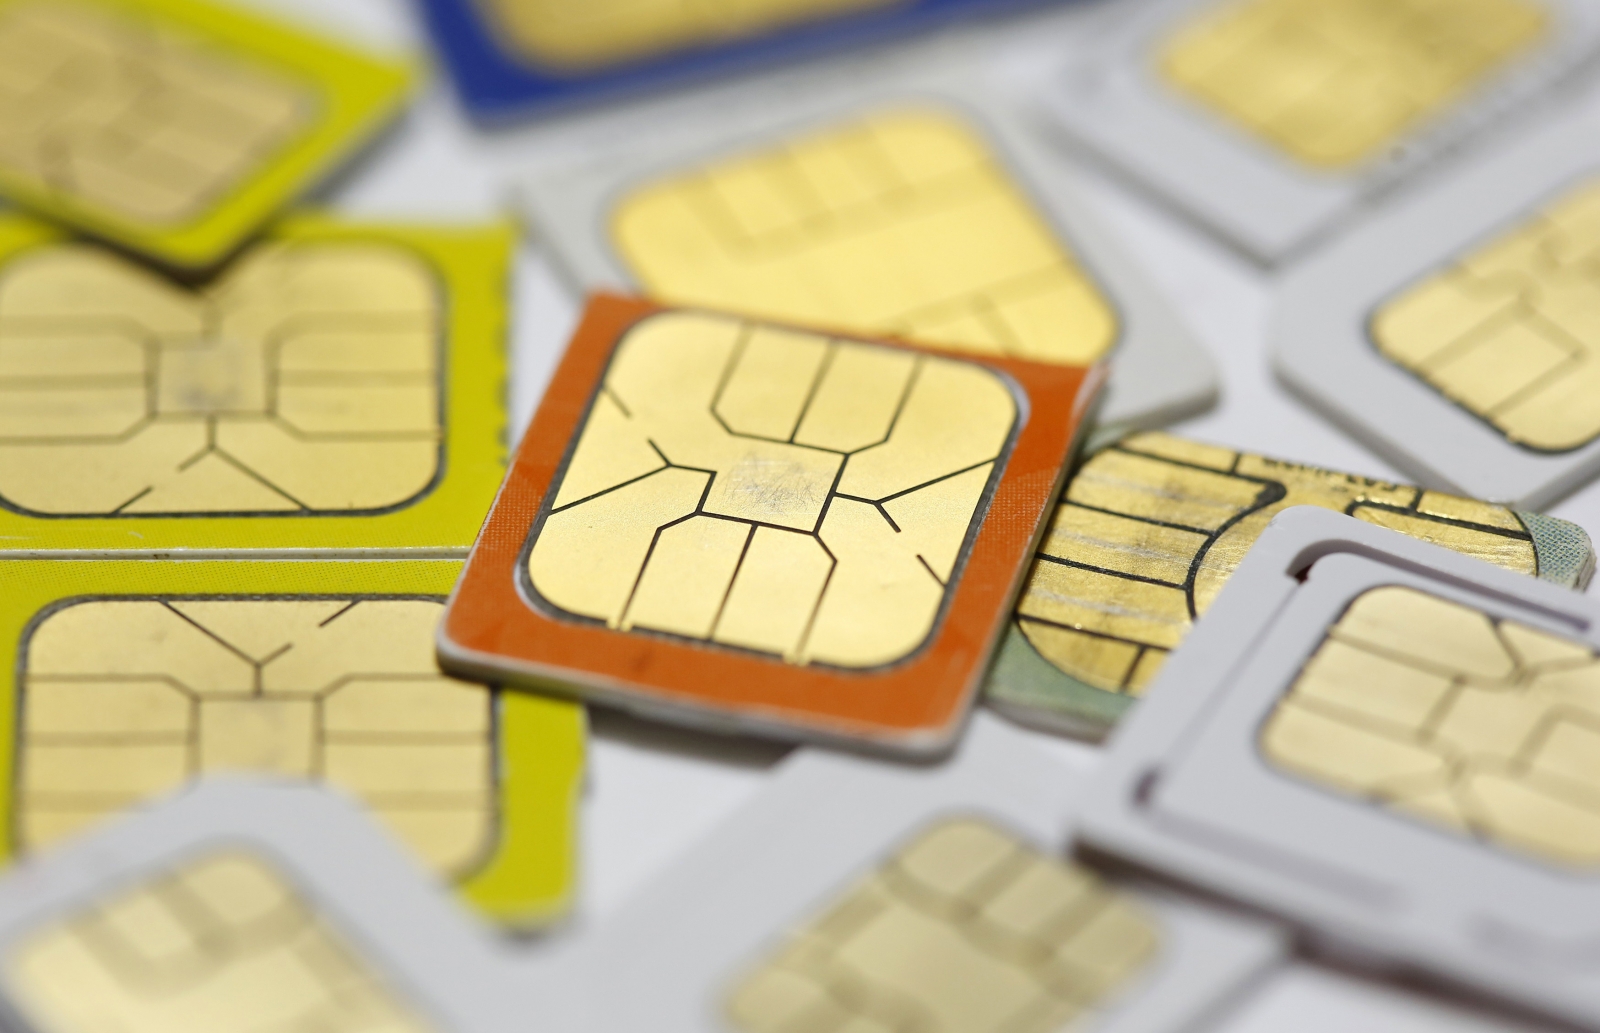  SIM  swap fraud The multi million pound security issue 